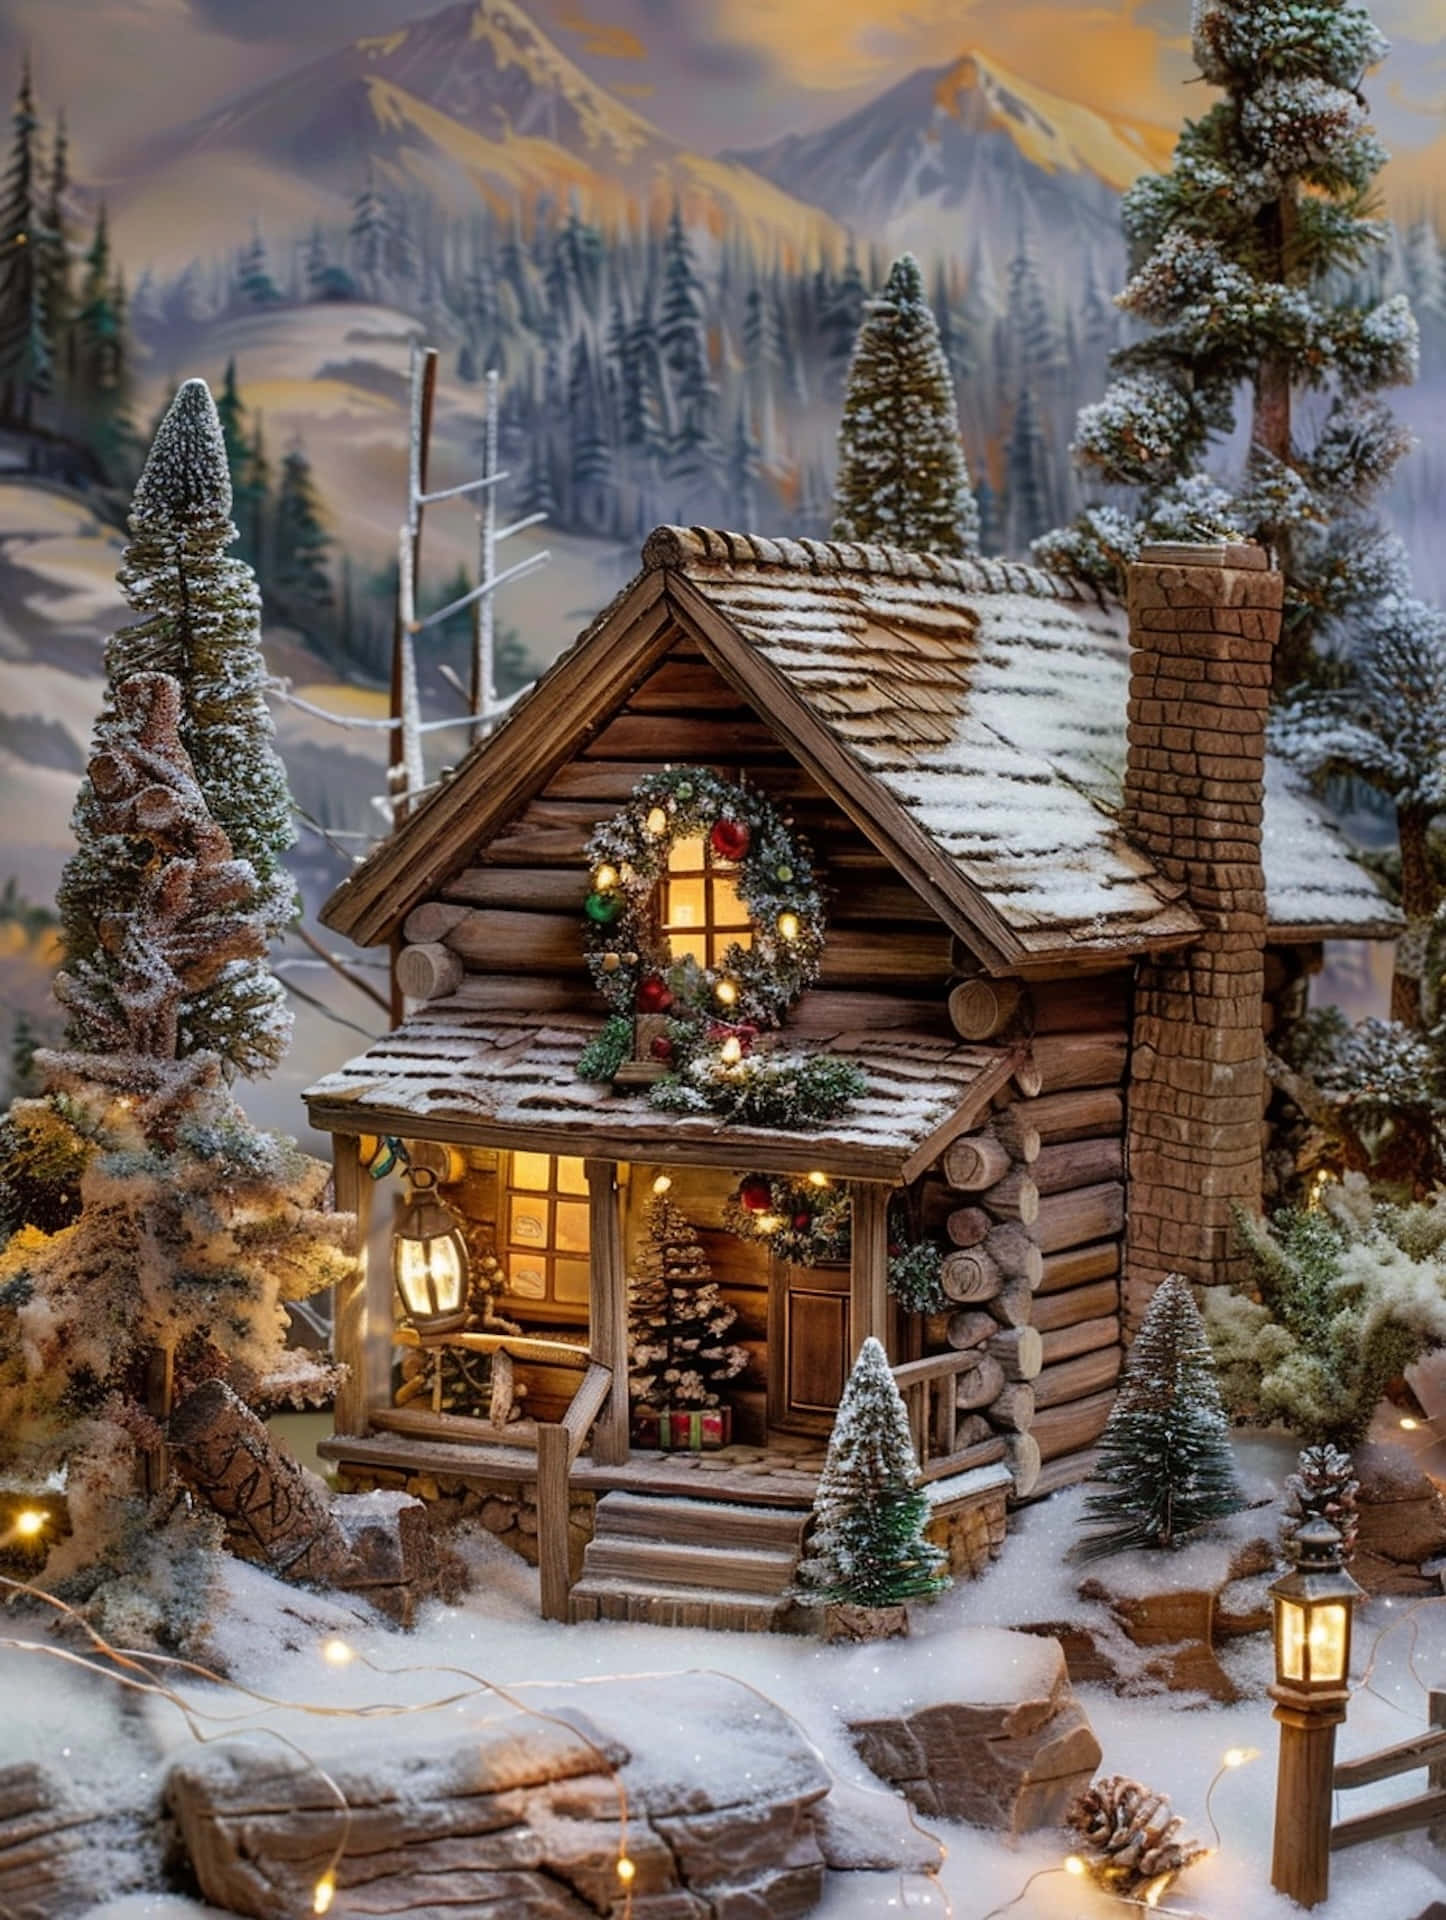 Enchanted Christmas Cabin Scene Wallpaper